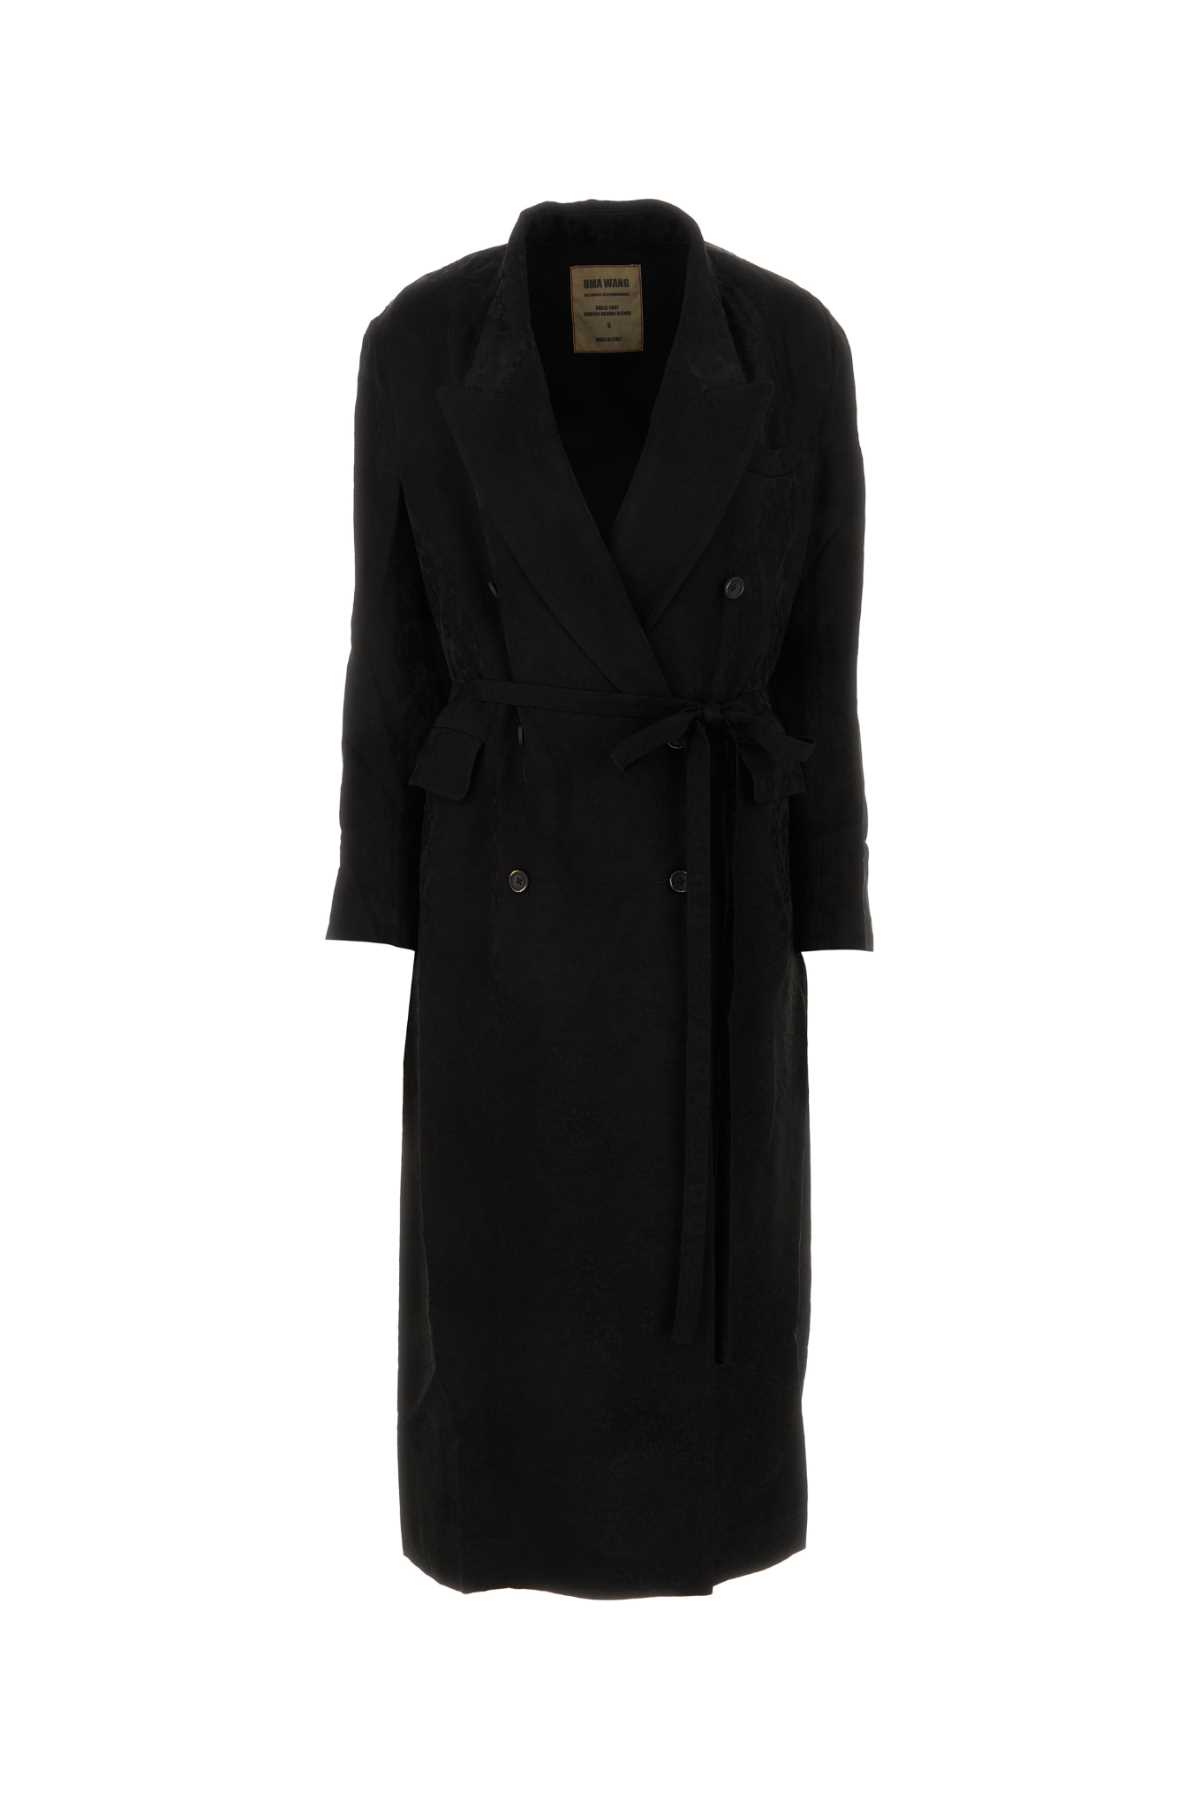 Shop Uma Wang Black Satin Callie Coat